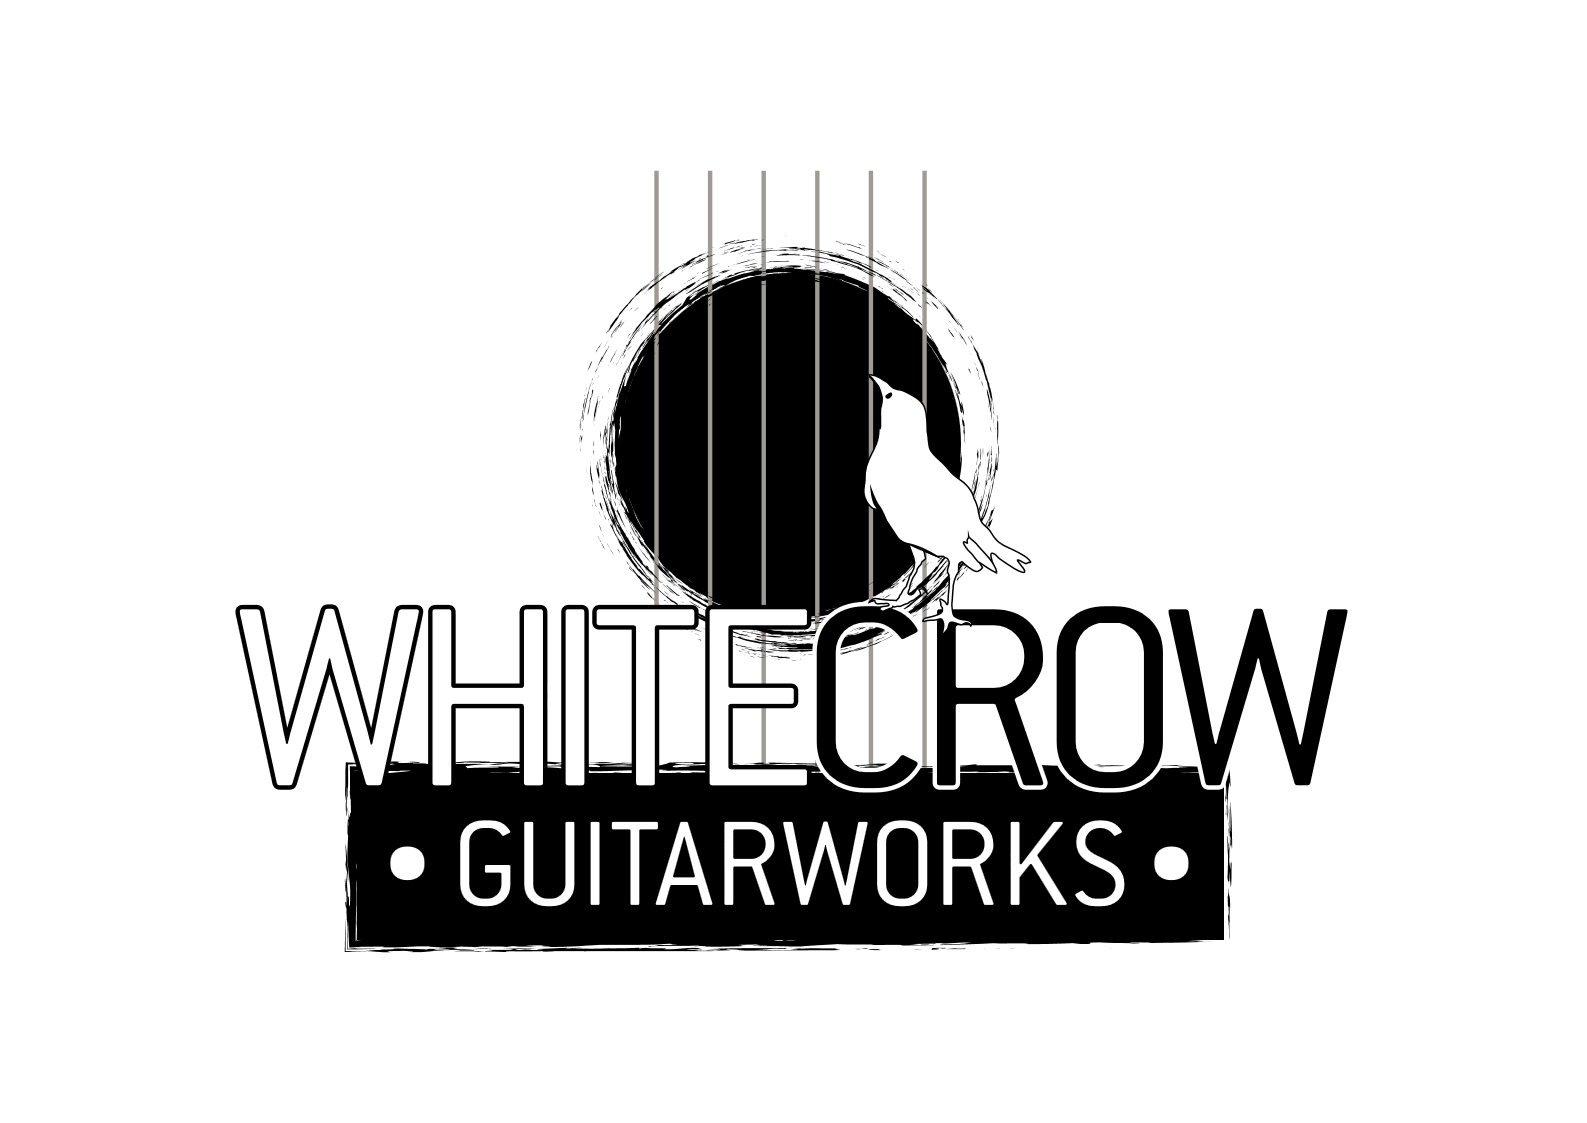 White Crow Logo - White crow guitarworks – Guitar making and repair tuition